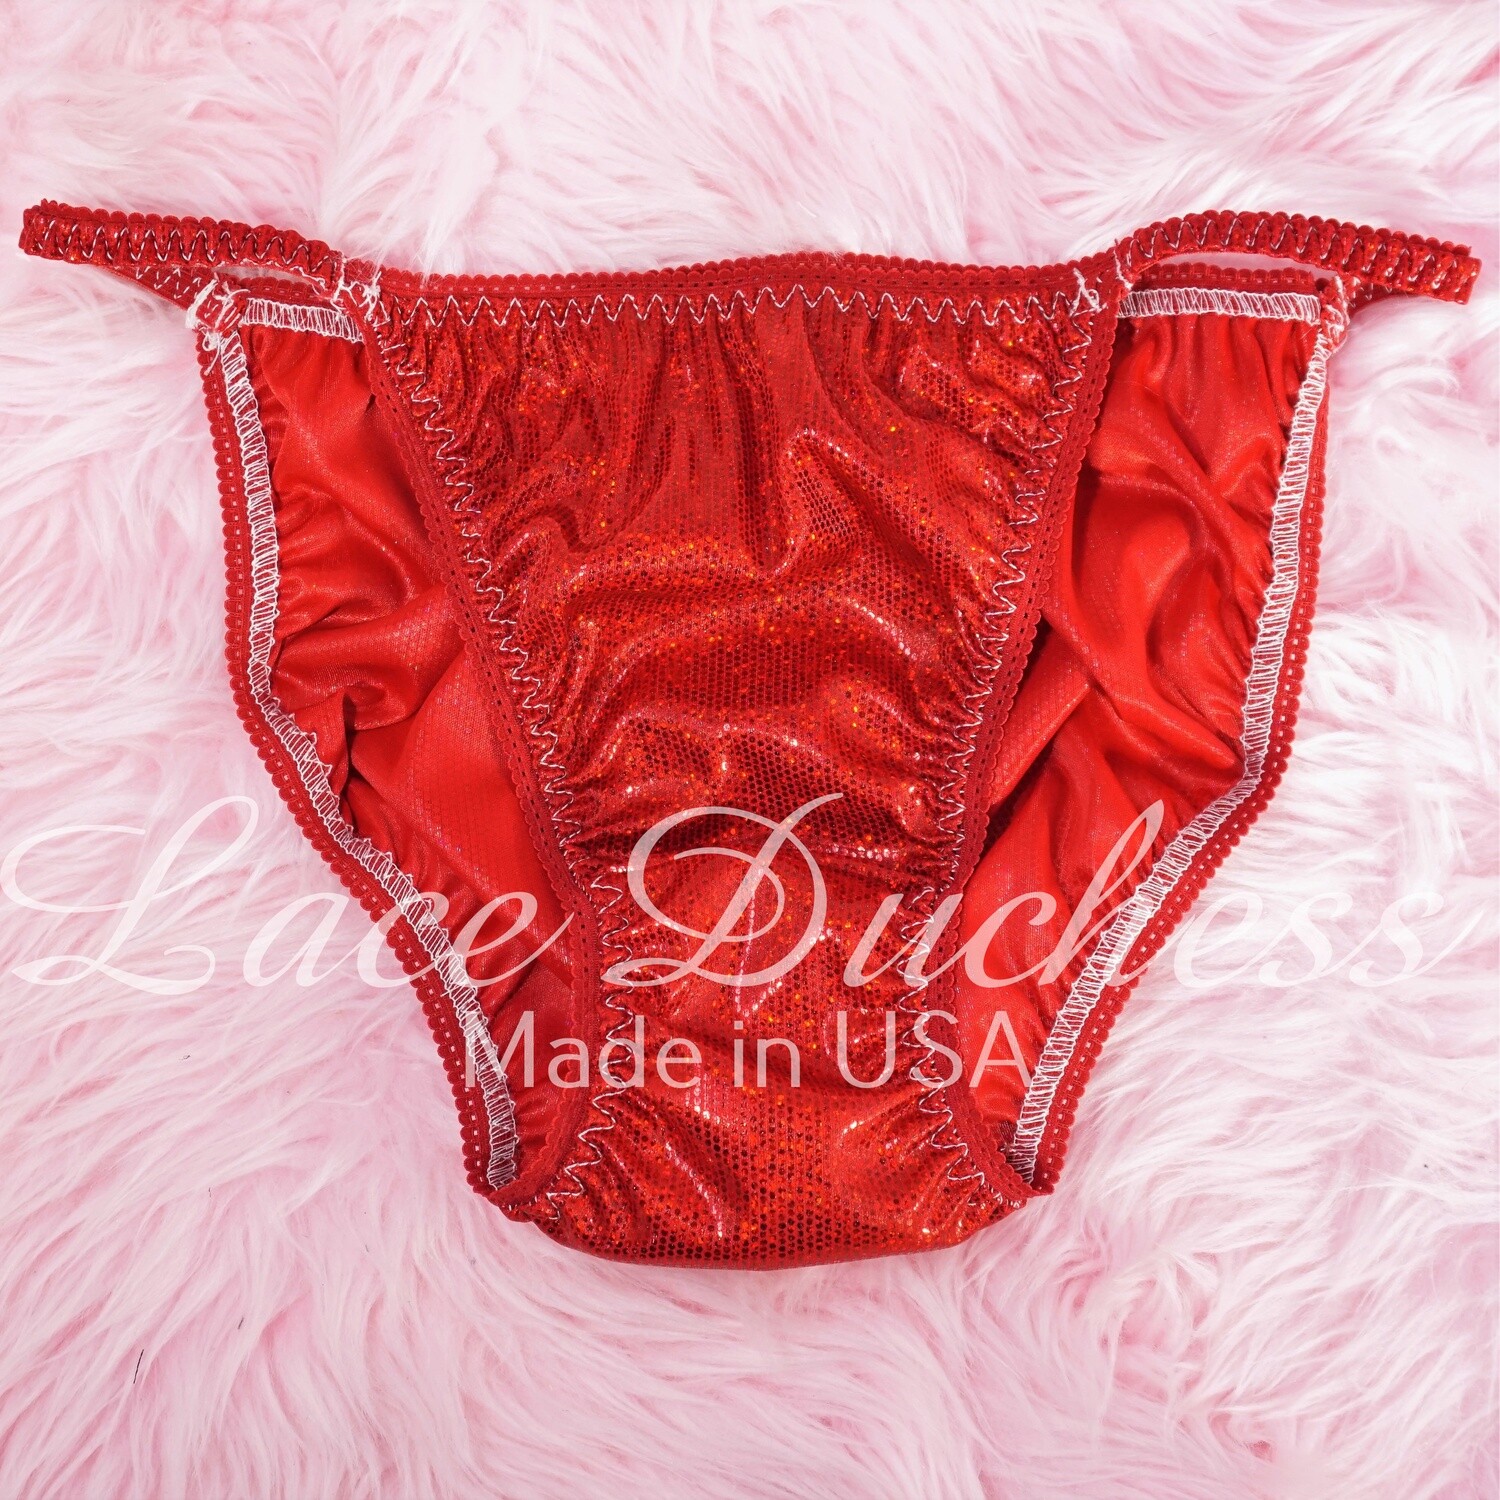 Lace Duchess Classic 80's Red FOIL Metallic Shiny satin panties - String bikini - 7 only